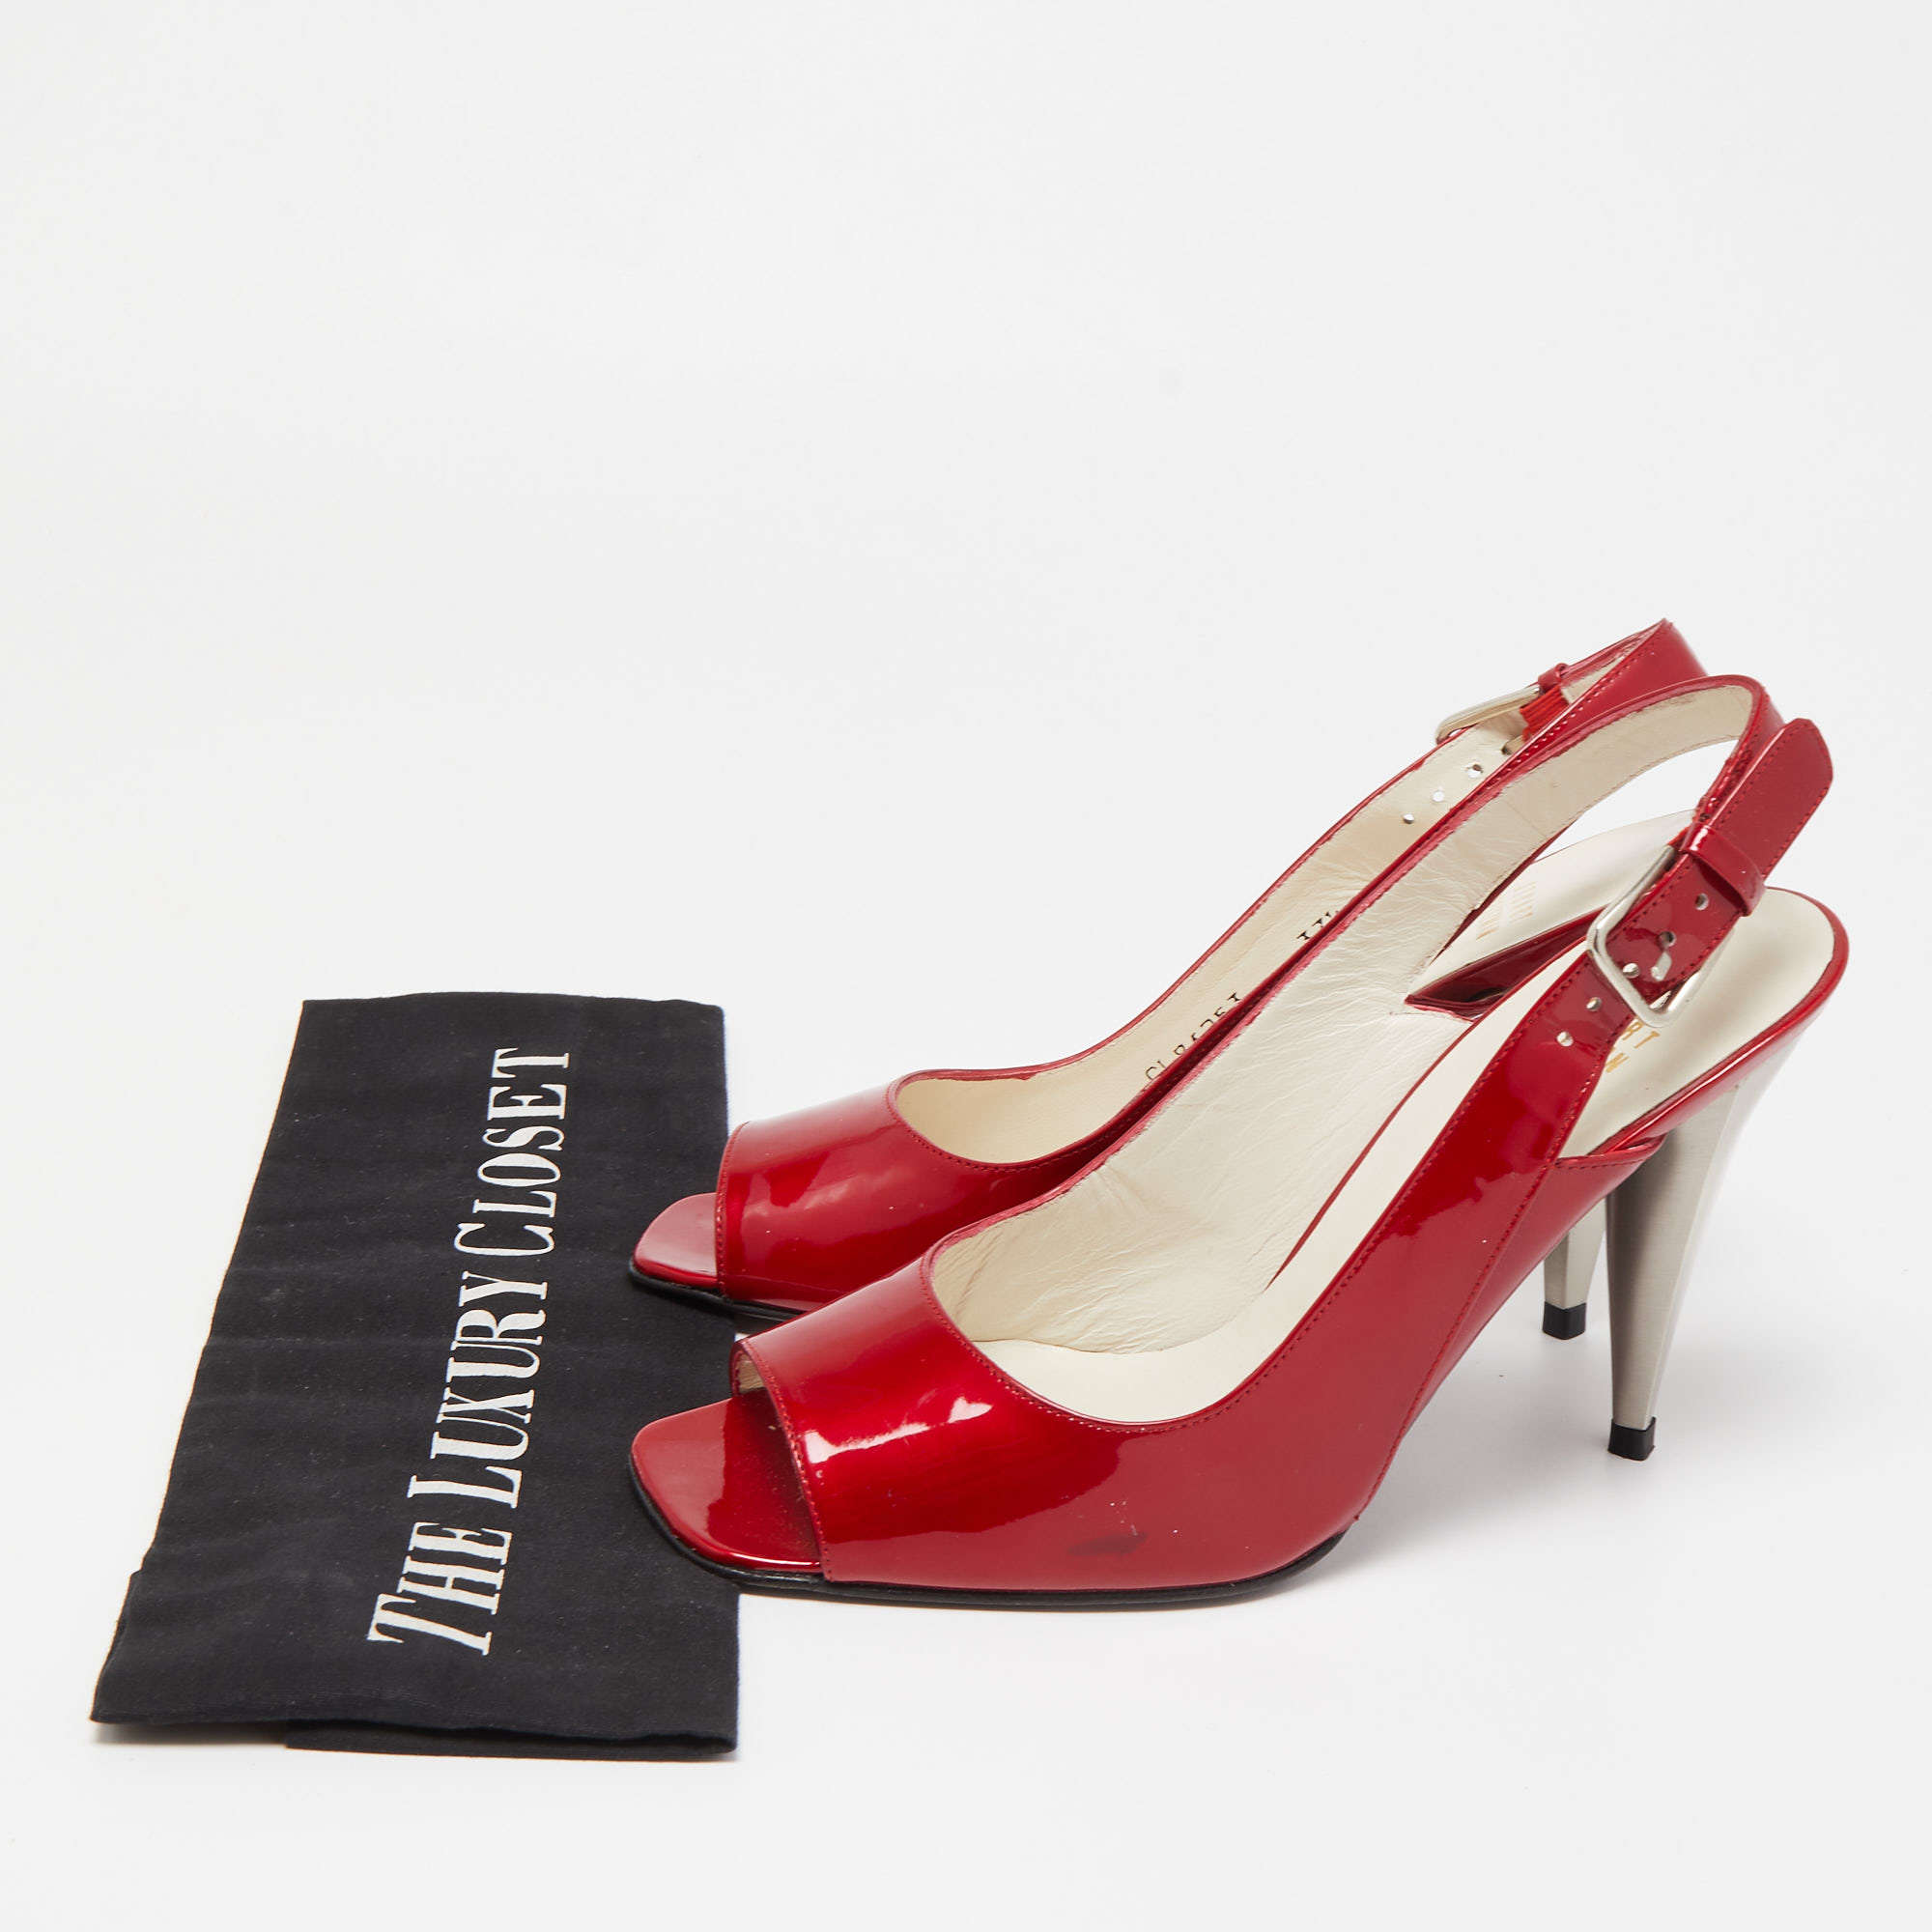 Stuart Weitzman Red Patent Leather Peep Toe Slingback Pumps Size 37.5